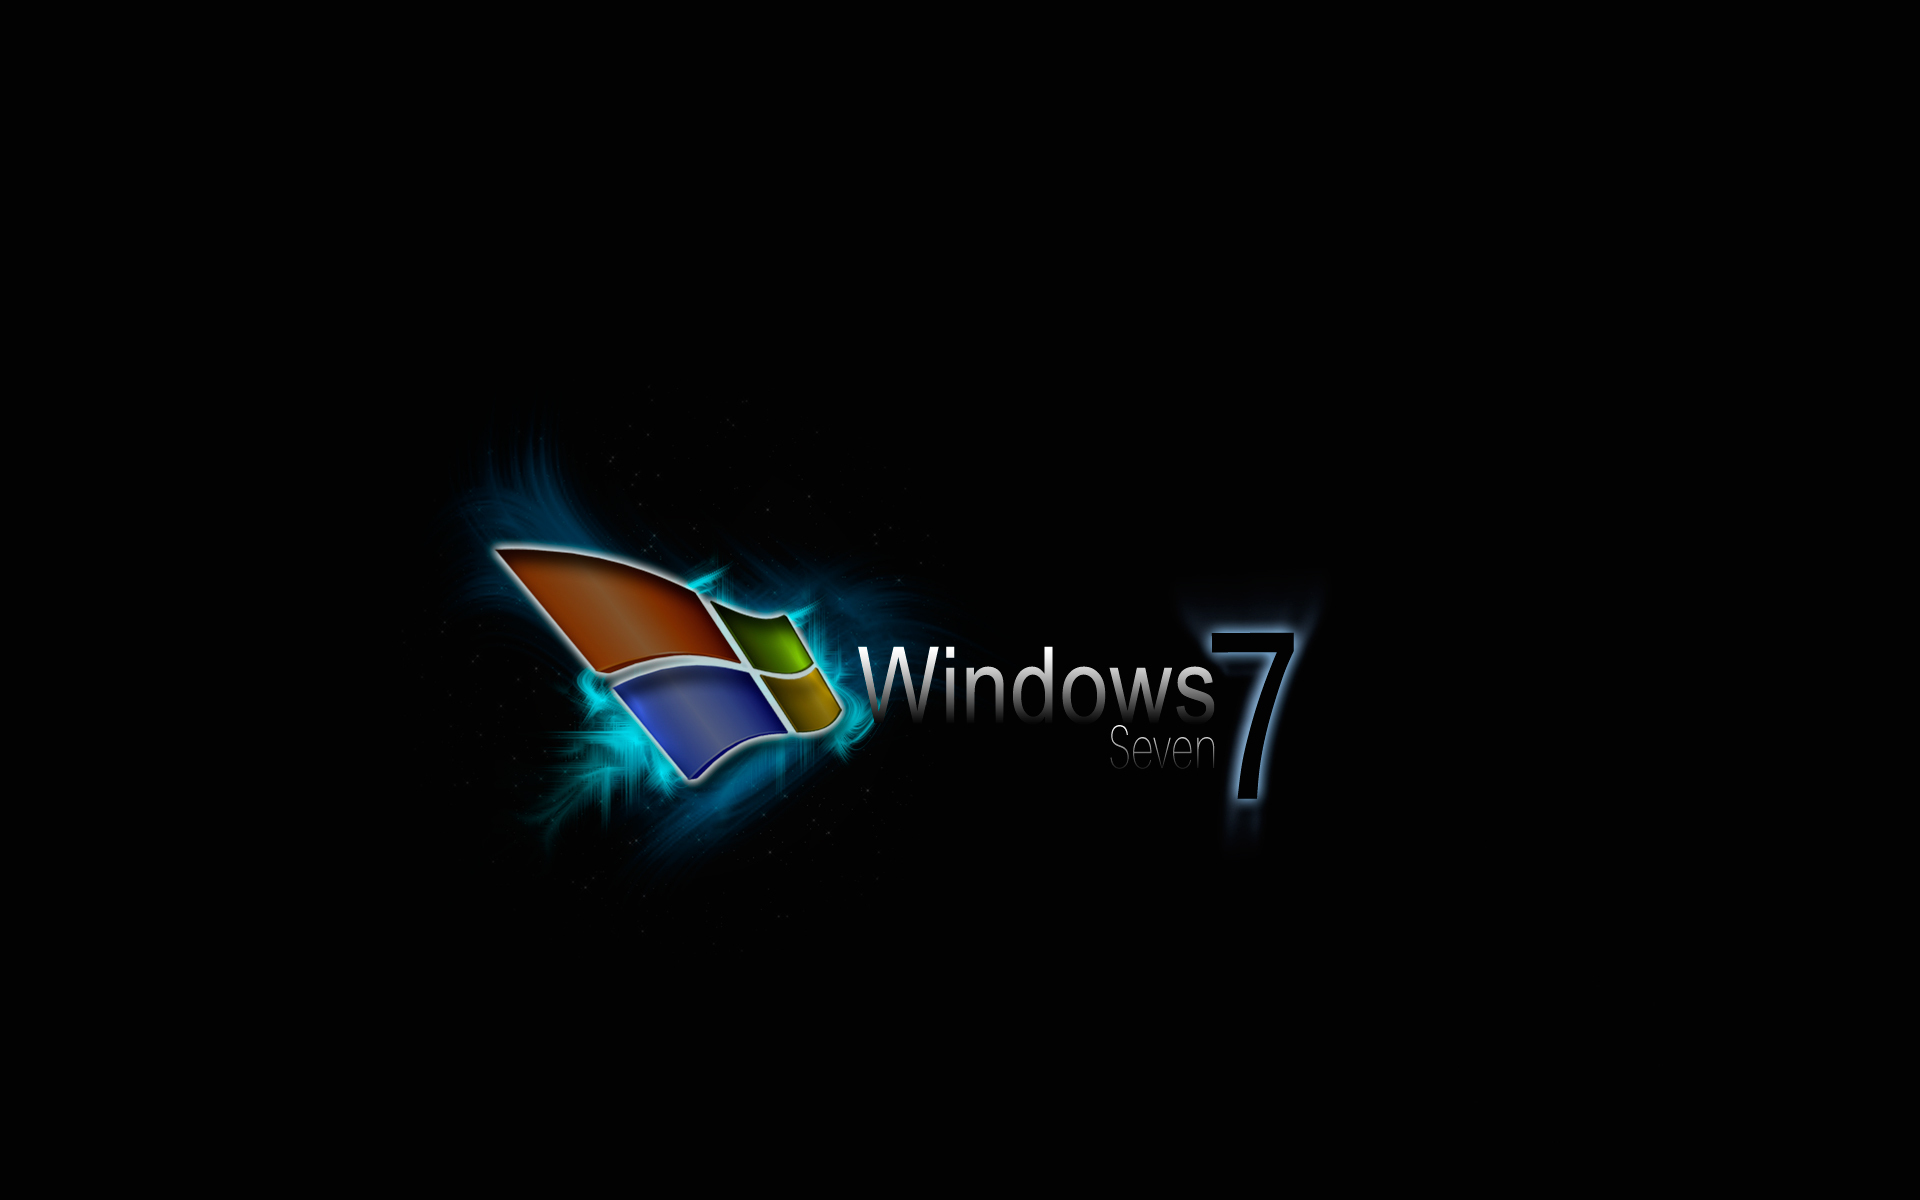 Windows - the colour Black Wallpaper 22255394 - Fanpop